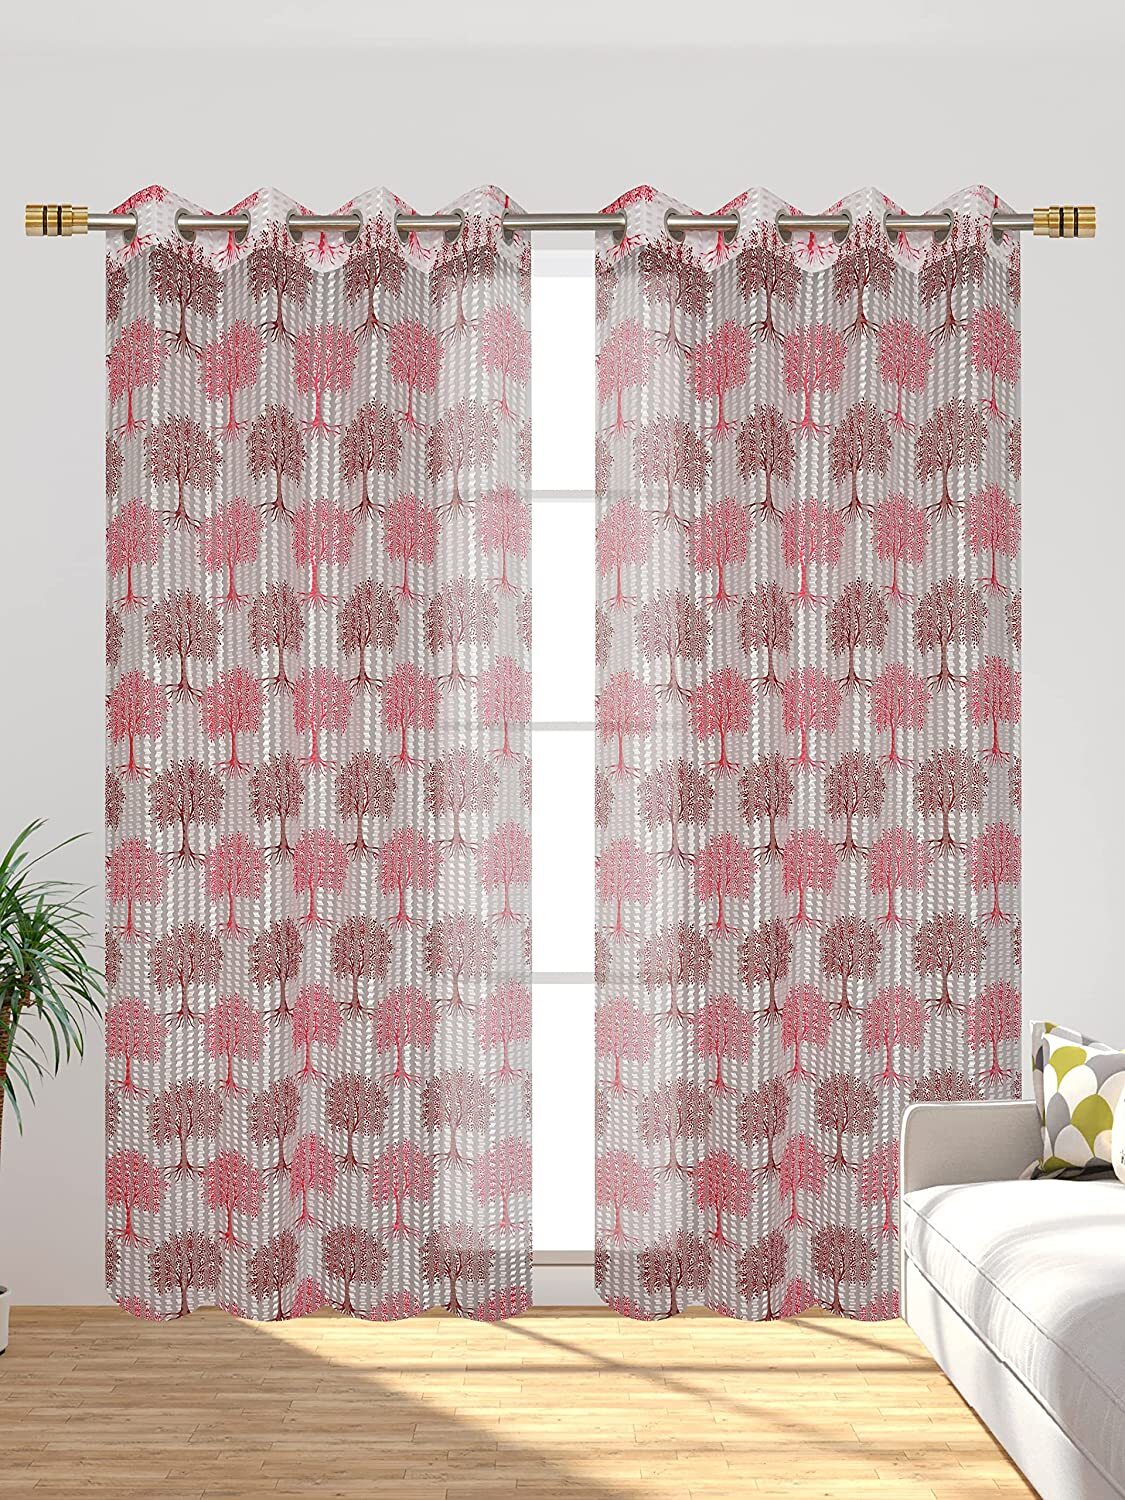 Tissue curtains